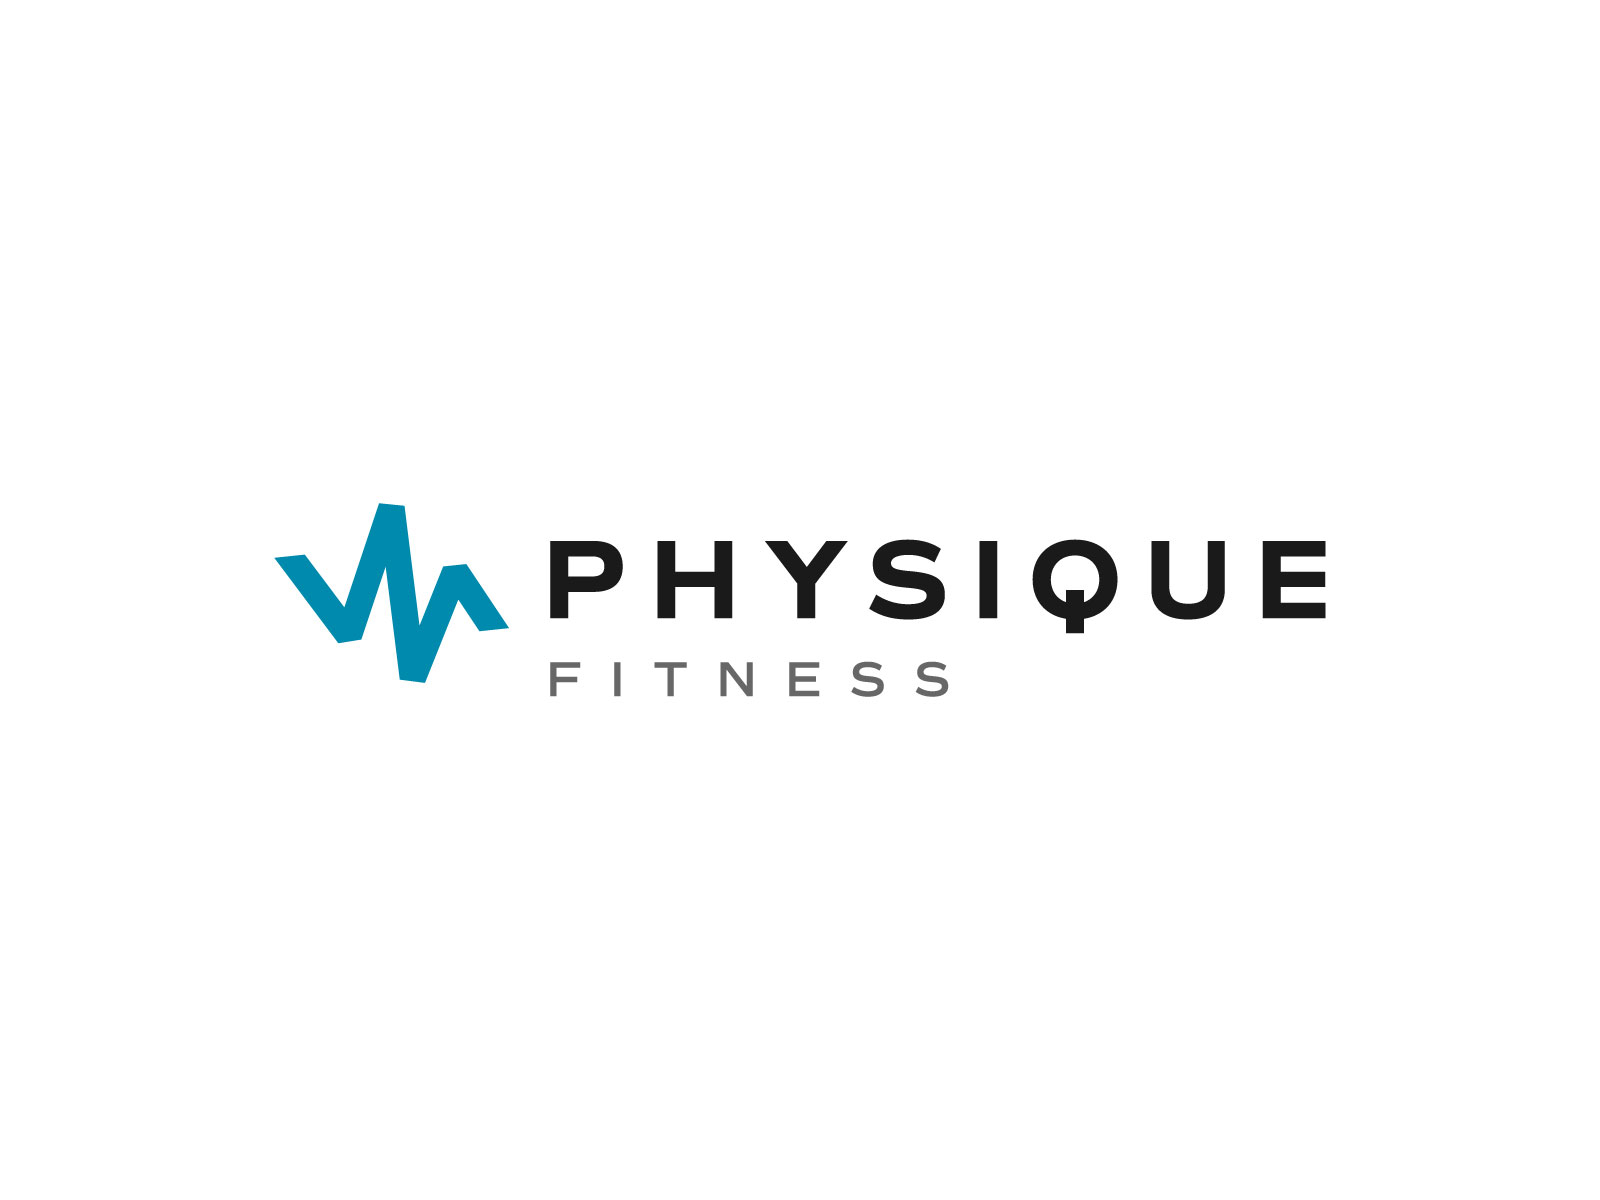 Physique Fitness: Brand Identity & Strategy - Logo by Tiffany Smith on ...